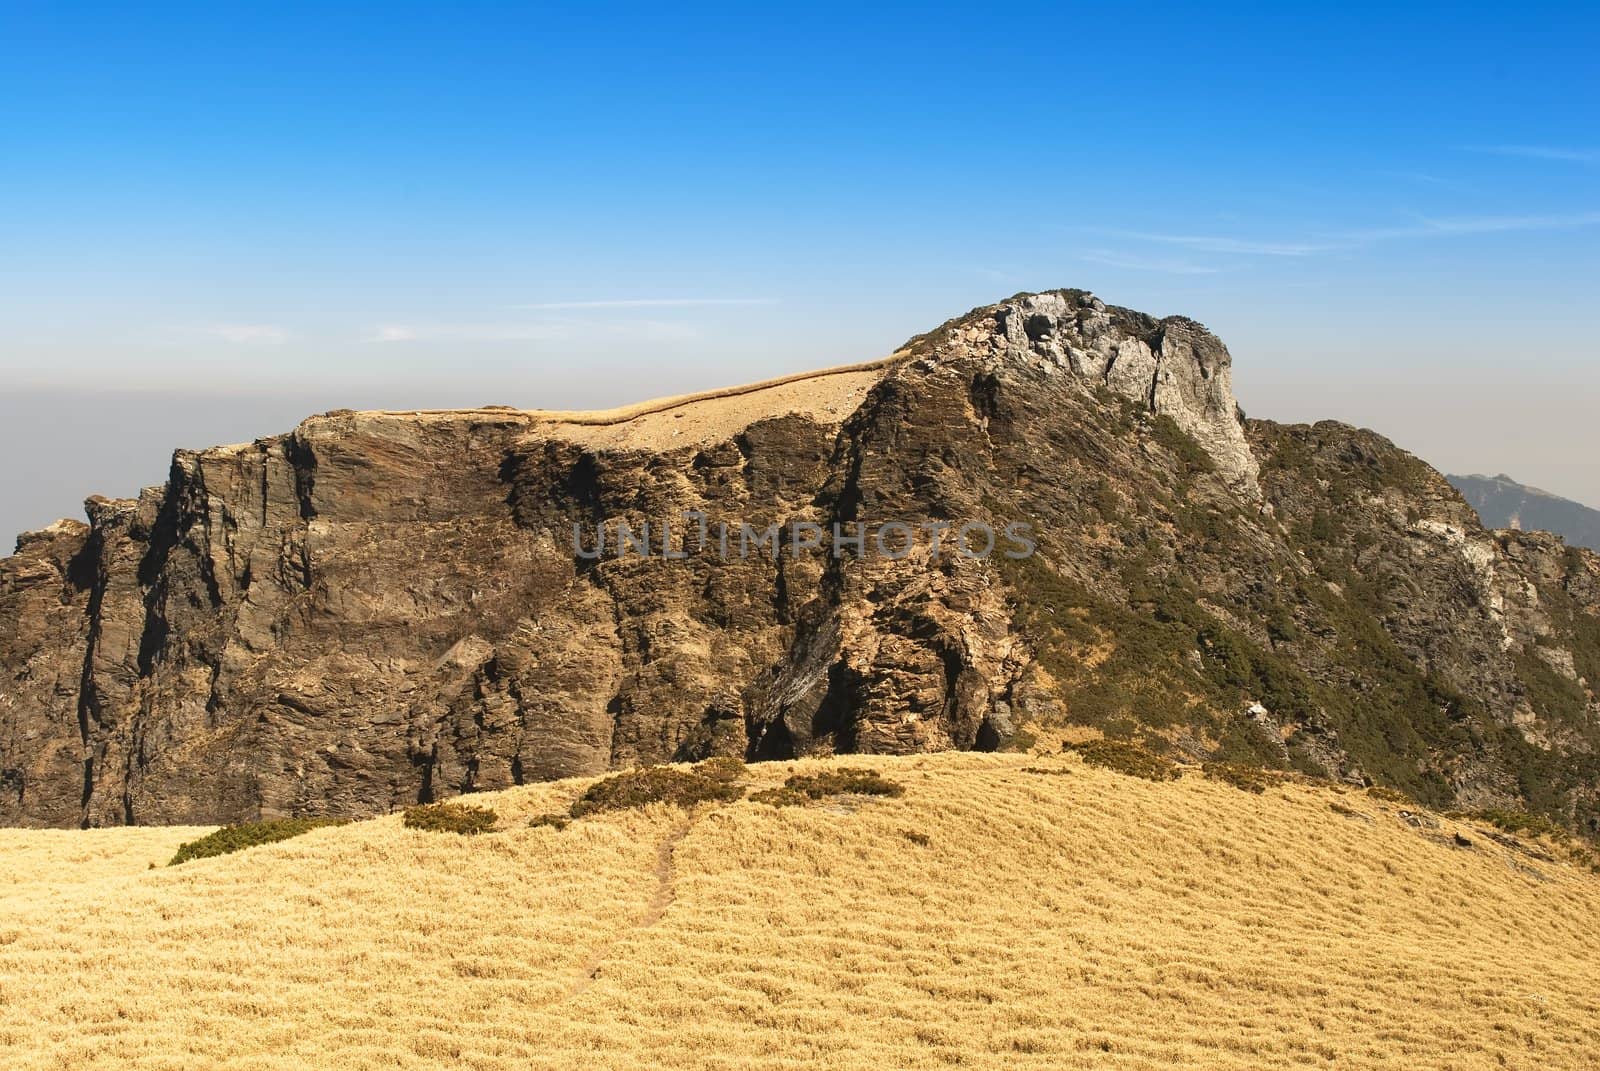 The dangerous rocky ravine in the high mountain. by elwynn